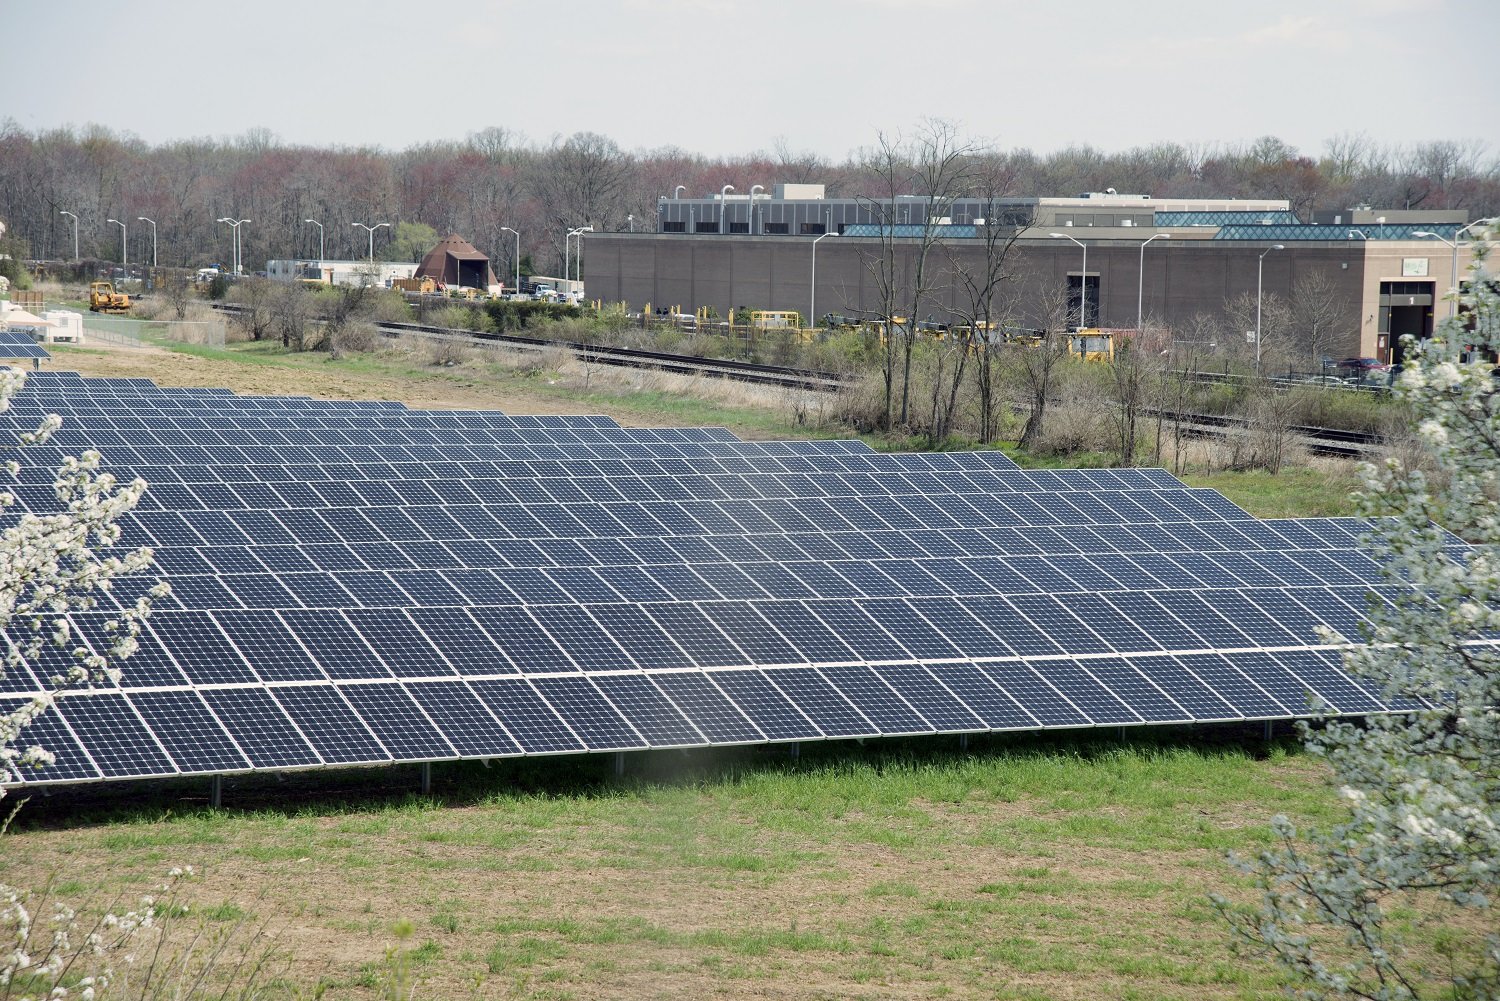 Gov. McAuliffe approves 20-megawatt solar farm for New Kent County